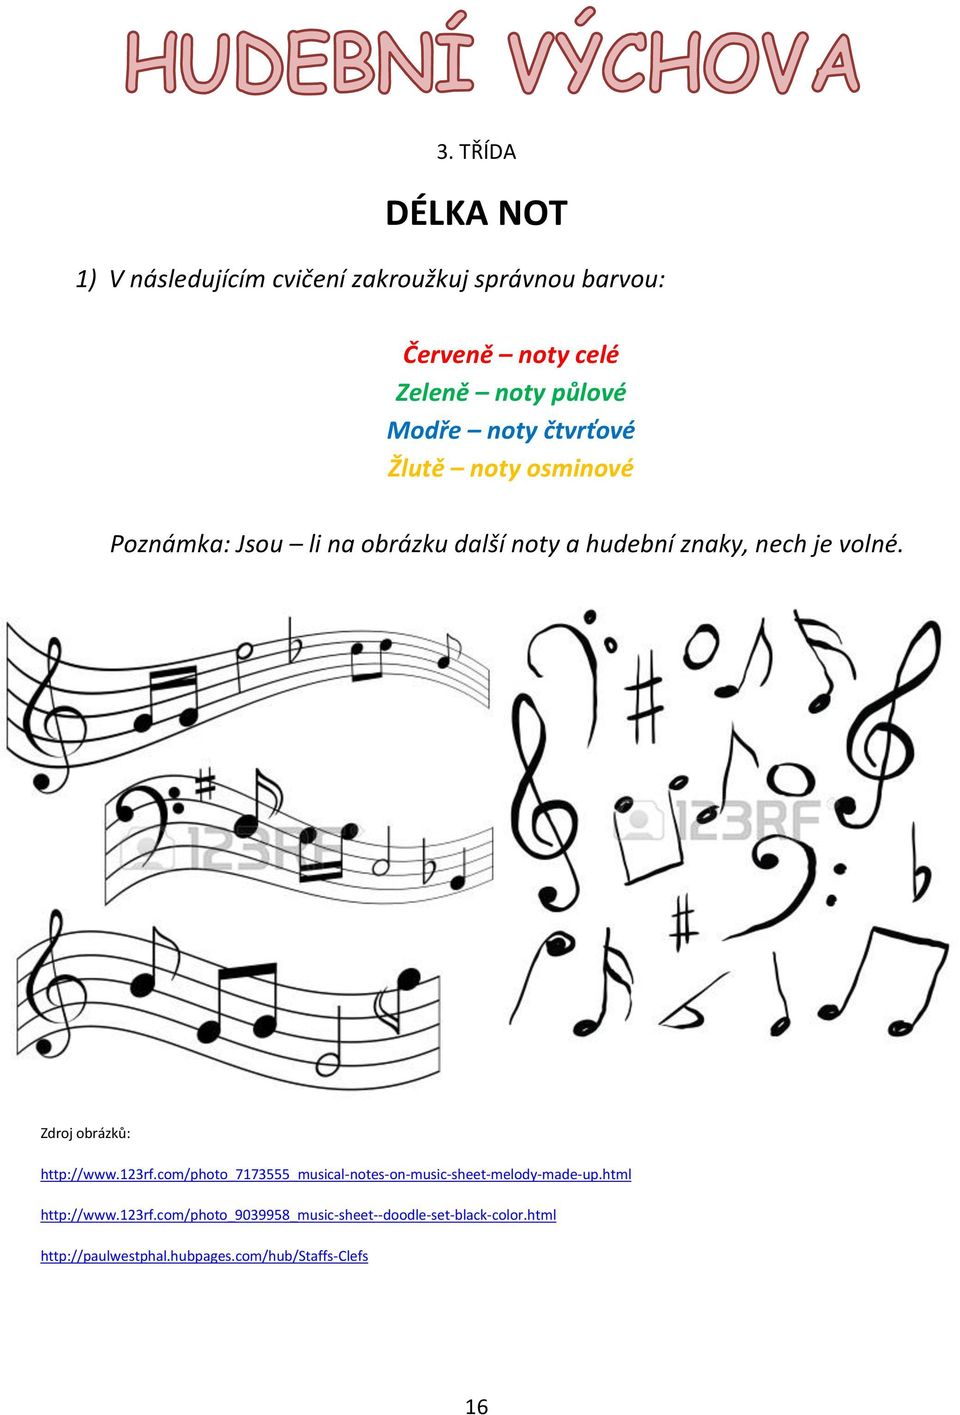 Zdroj obrázků: http://www.123rf.com/photo_7173555_musical-notes-on-music-sheet-melody-made-up.html http://www.